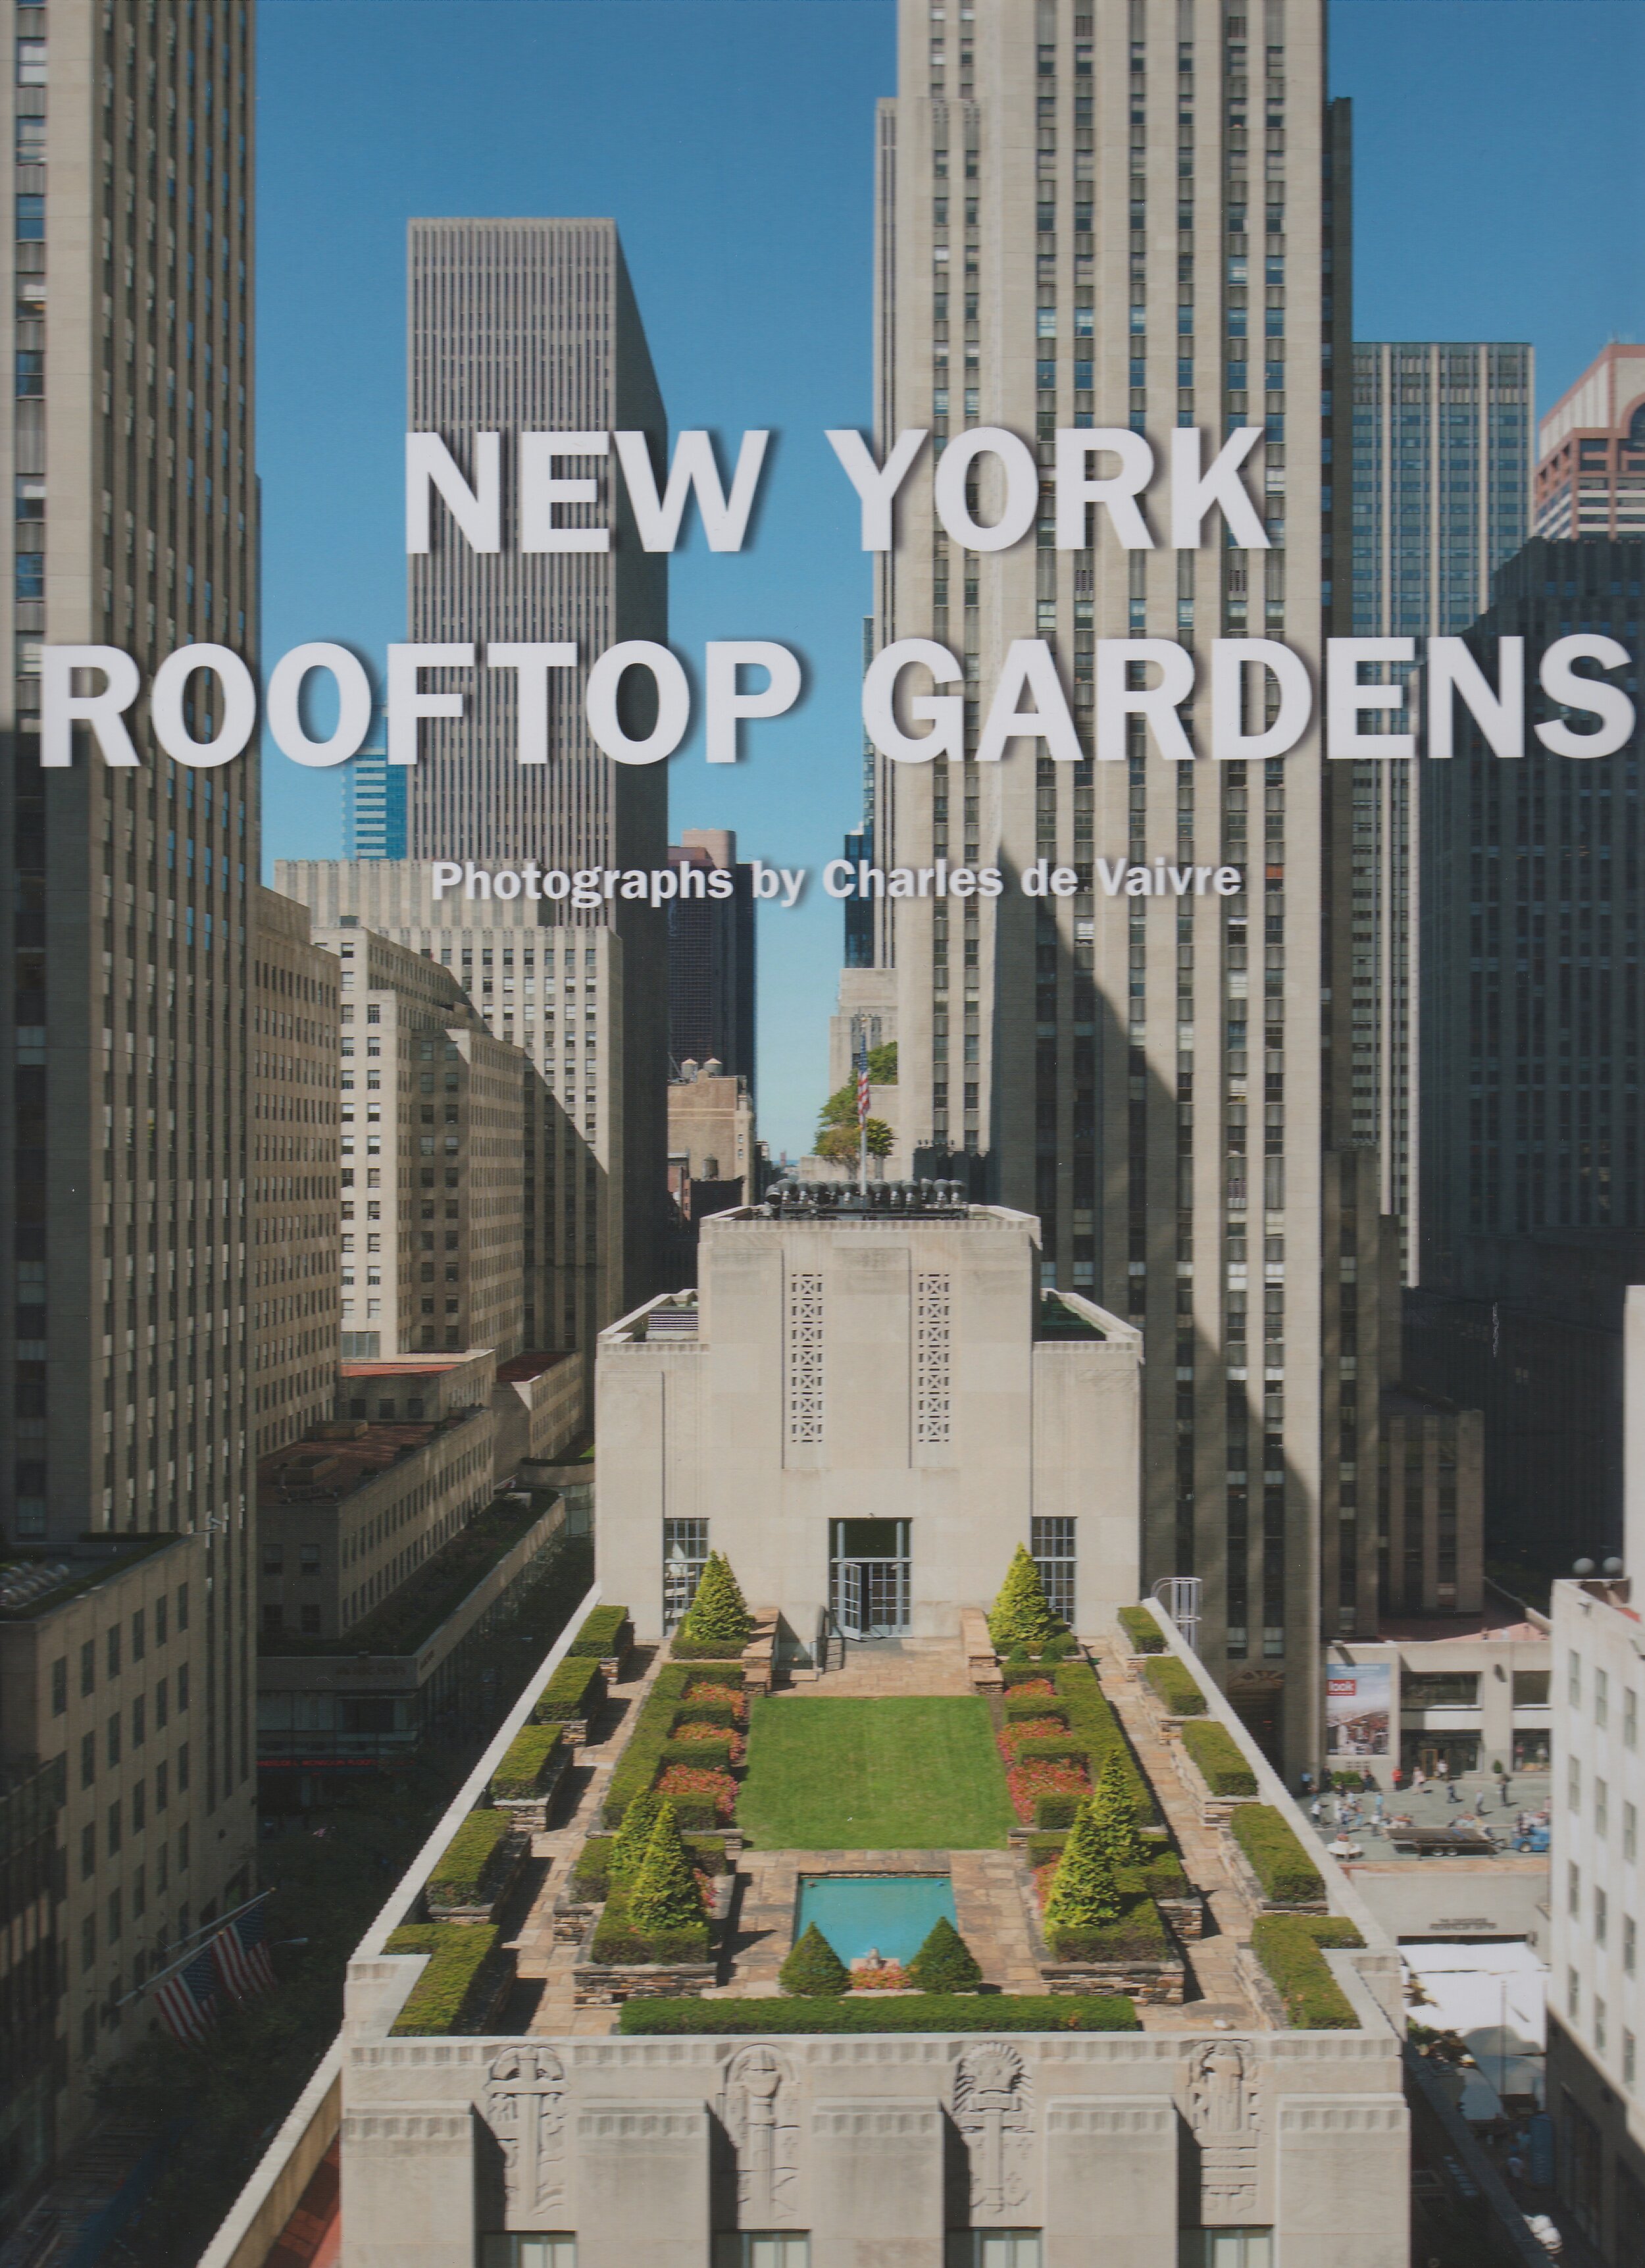 NY Rooftop Gardens TASCHEN COVER.jpg